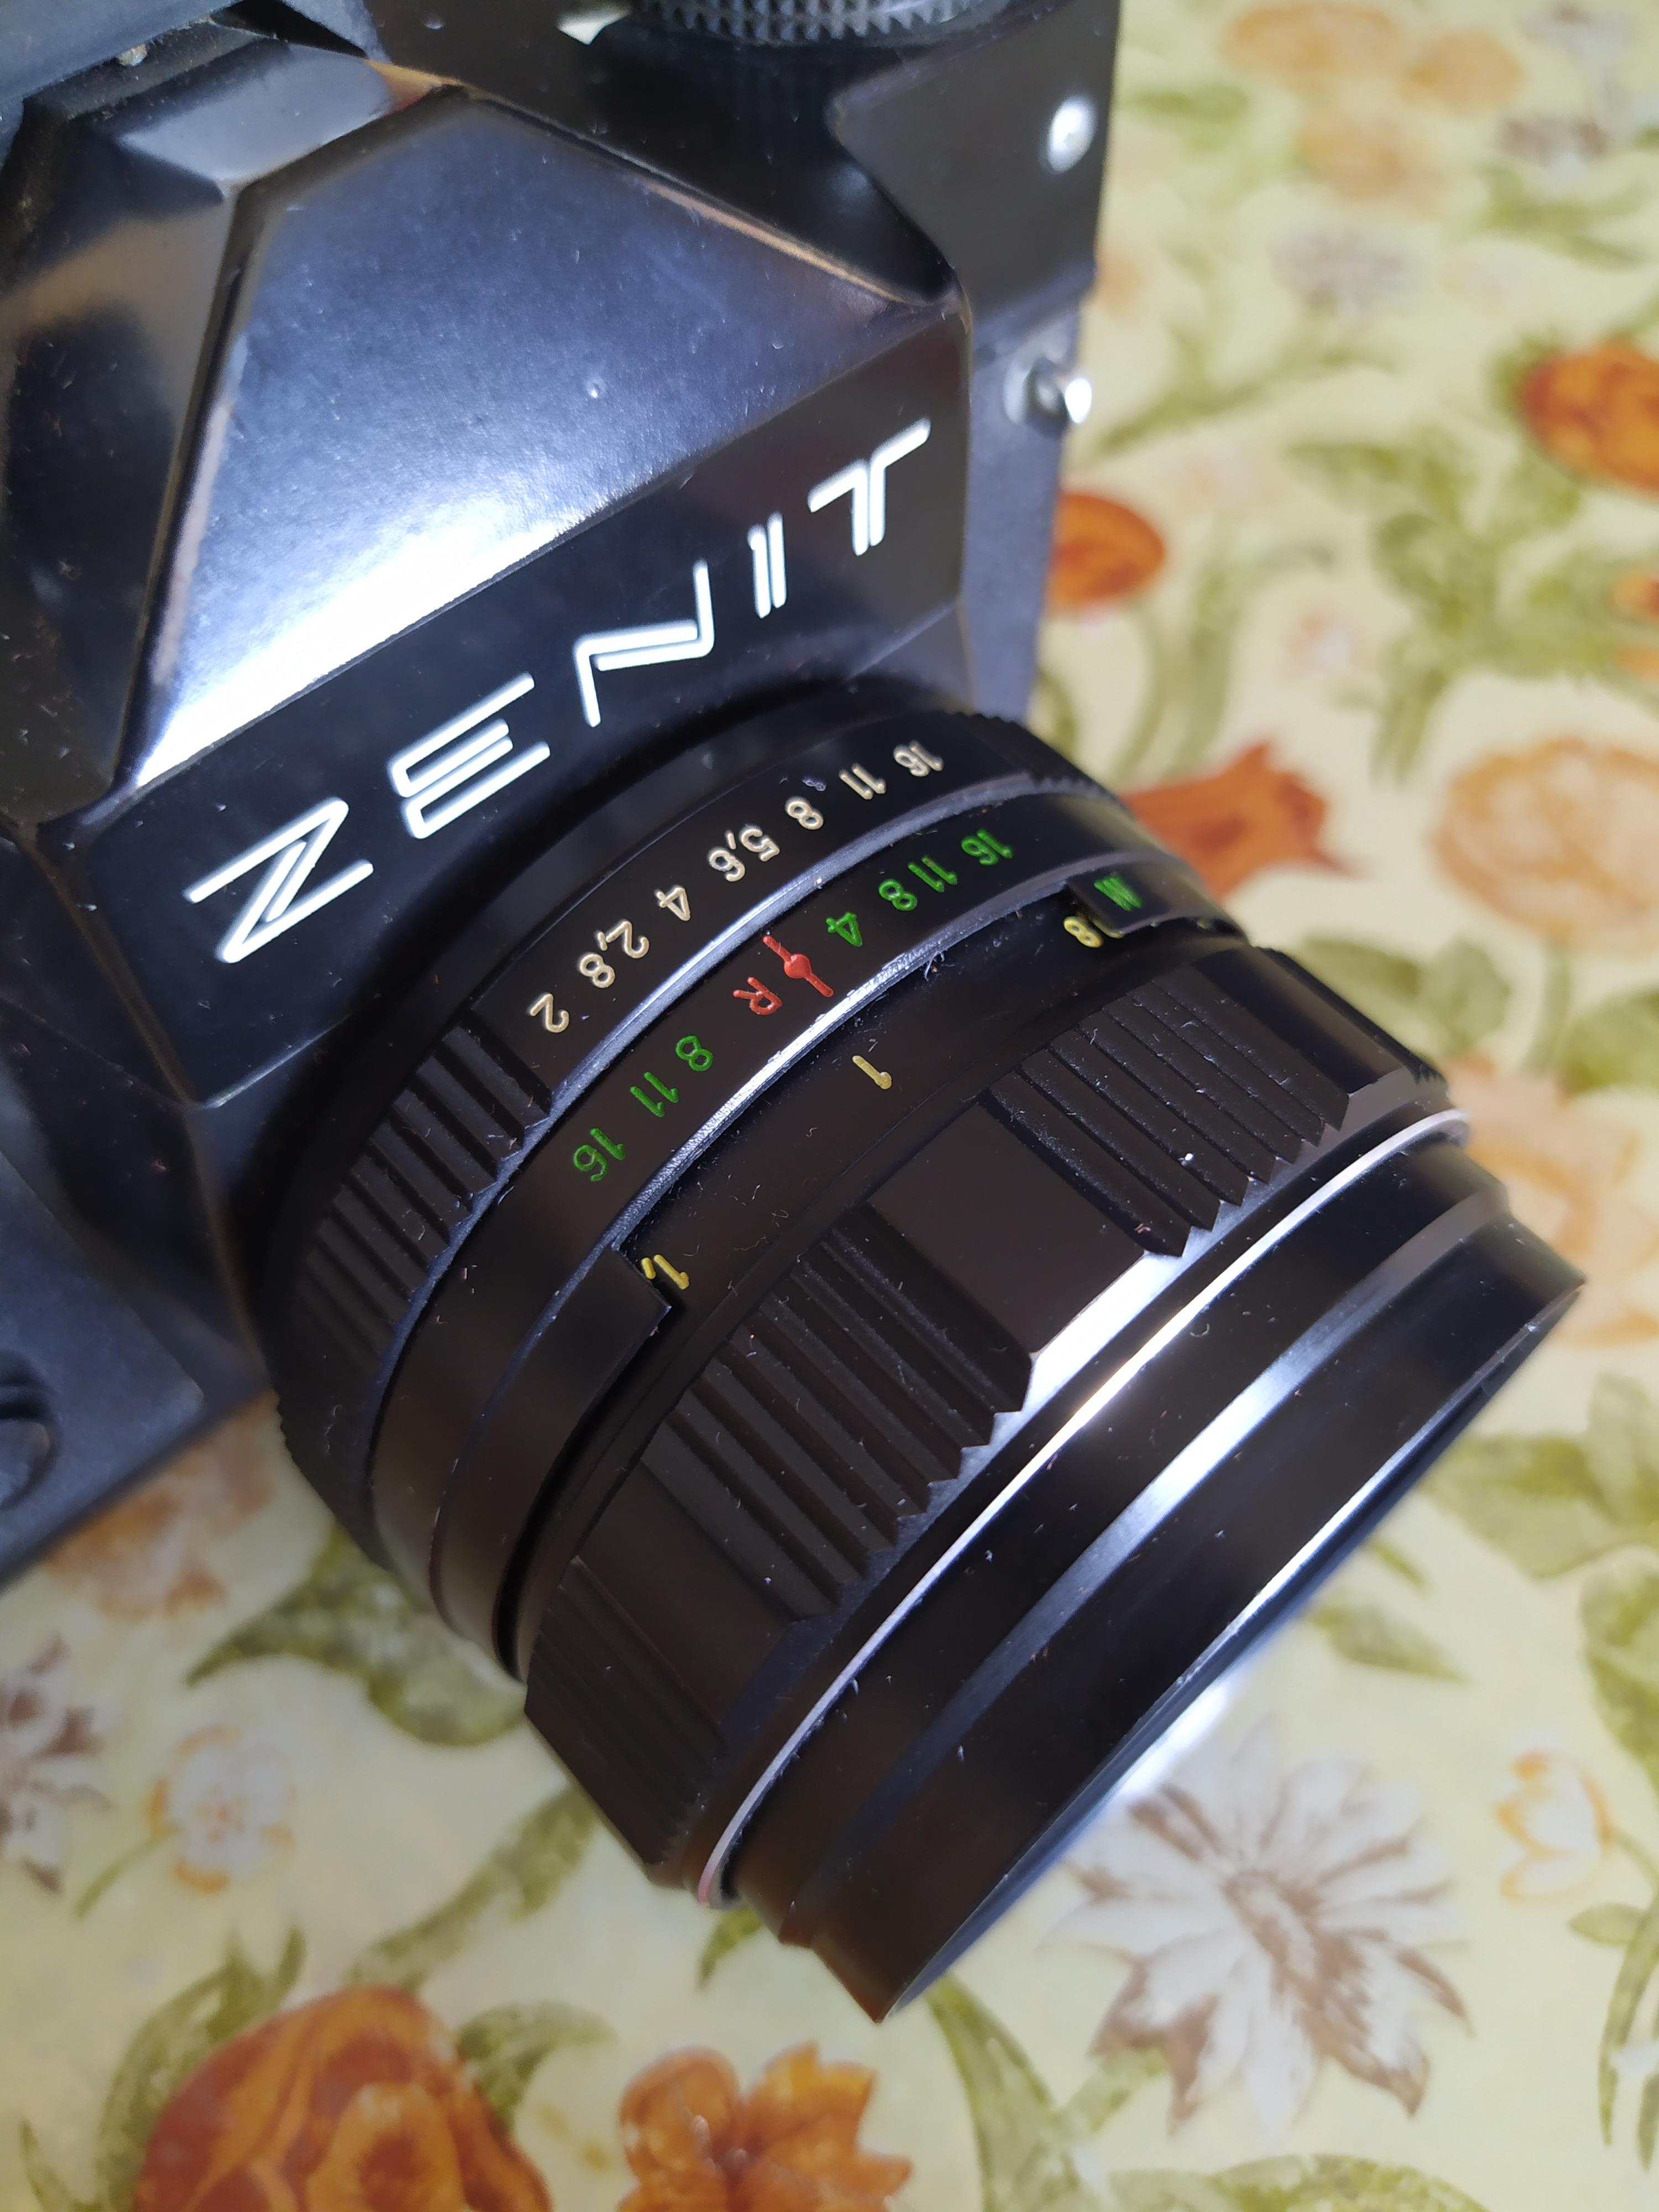 Zenit TTL Analog Fotograf Makinesi Helios 44mm lens + Deri kilif + Boyunluk  | DonanımHaber Forum